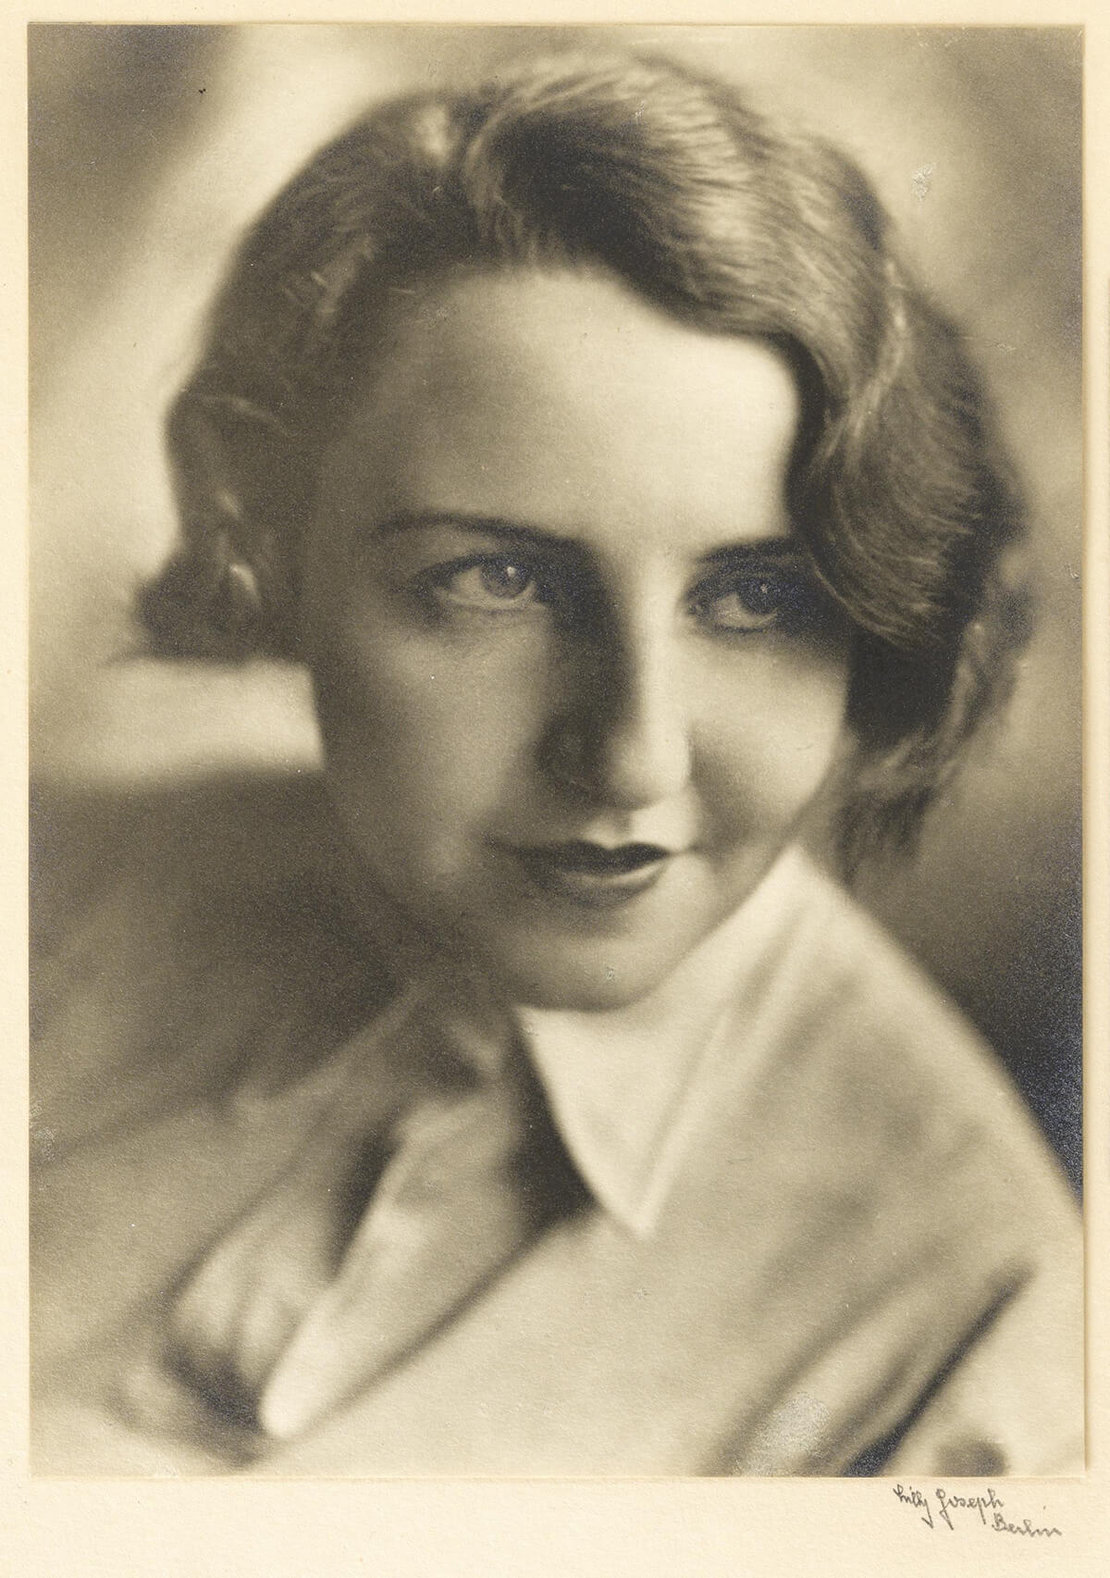 Lilly Joseph: Porträt einer unbekannten Frau, Berlin um 1933 